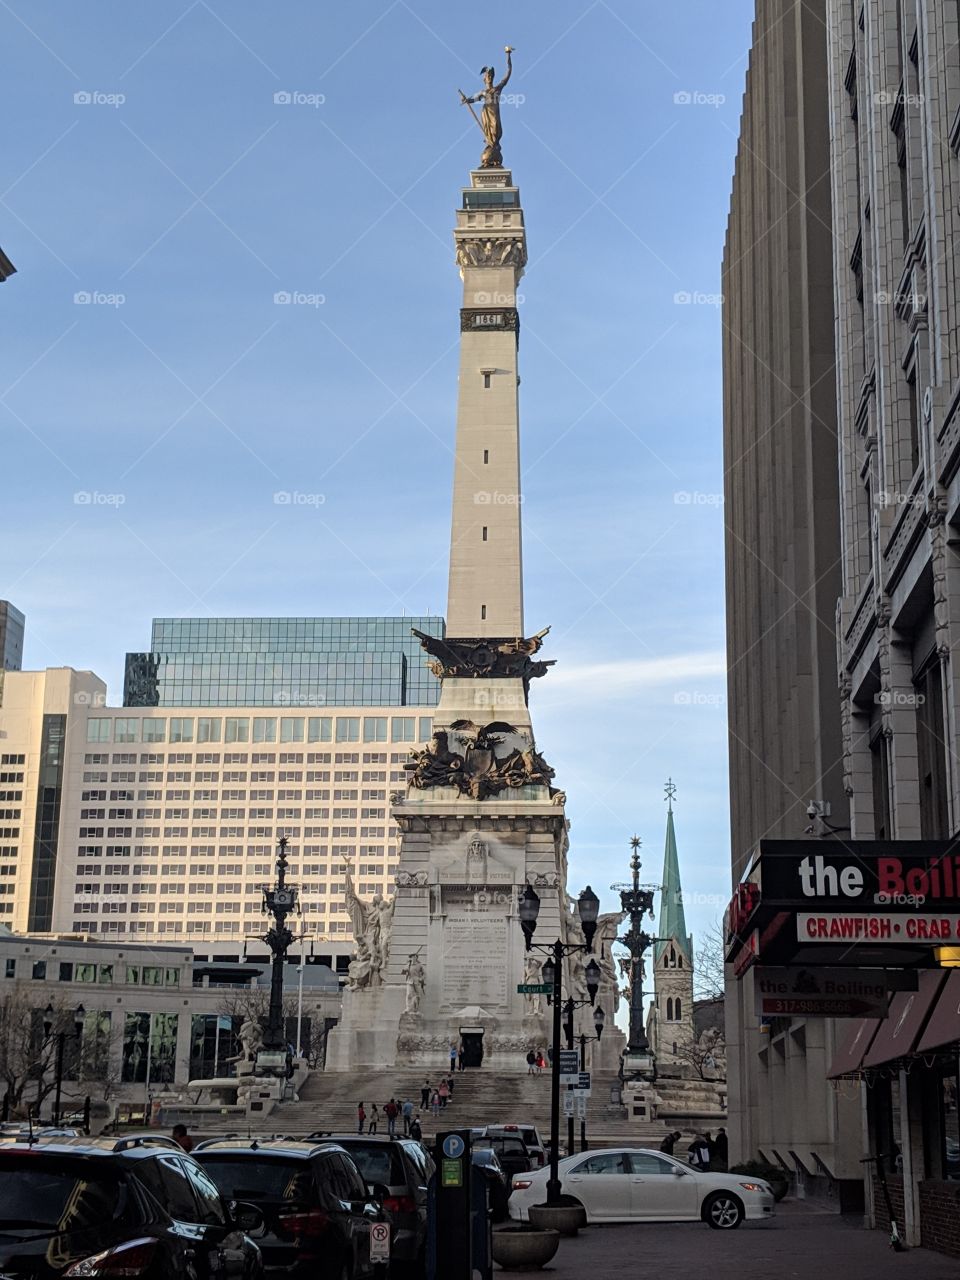 Indianapolis